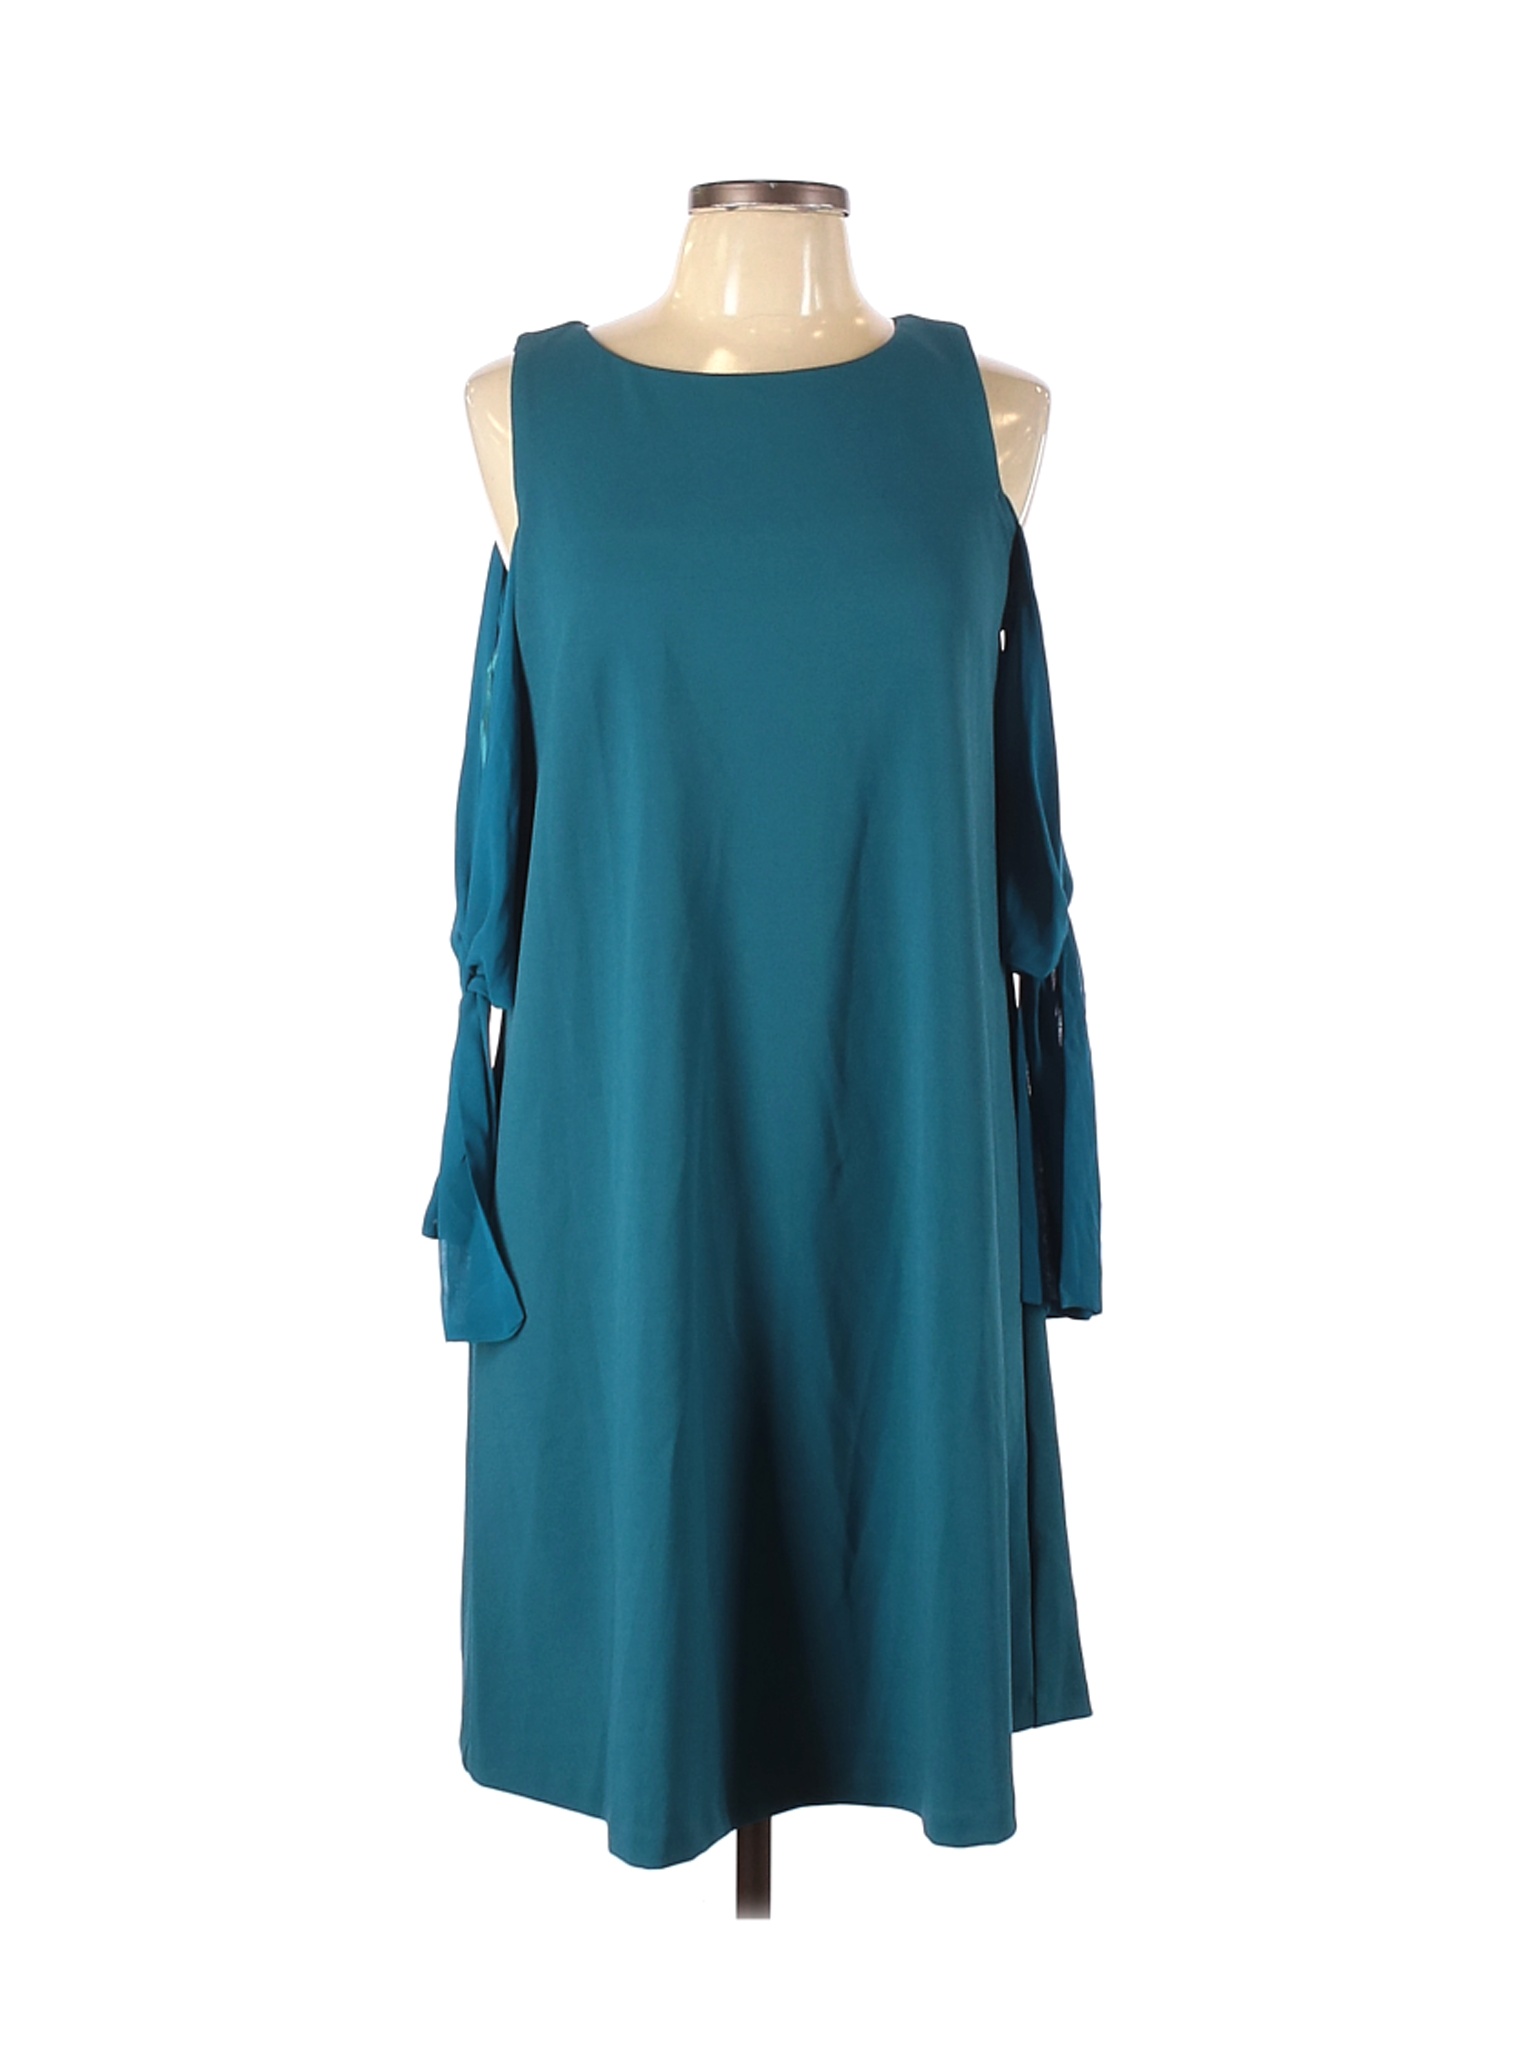 NWT Taylor Women Green Casual Dress L | eBay